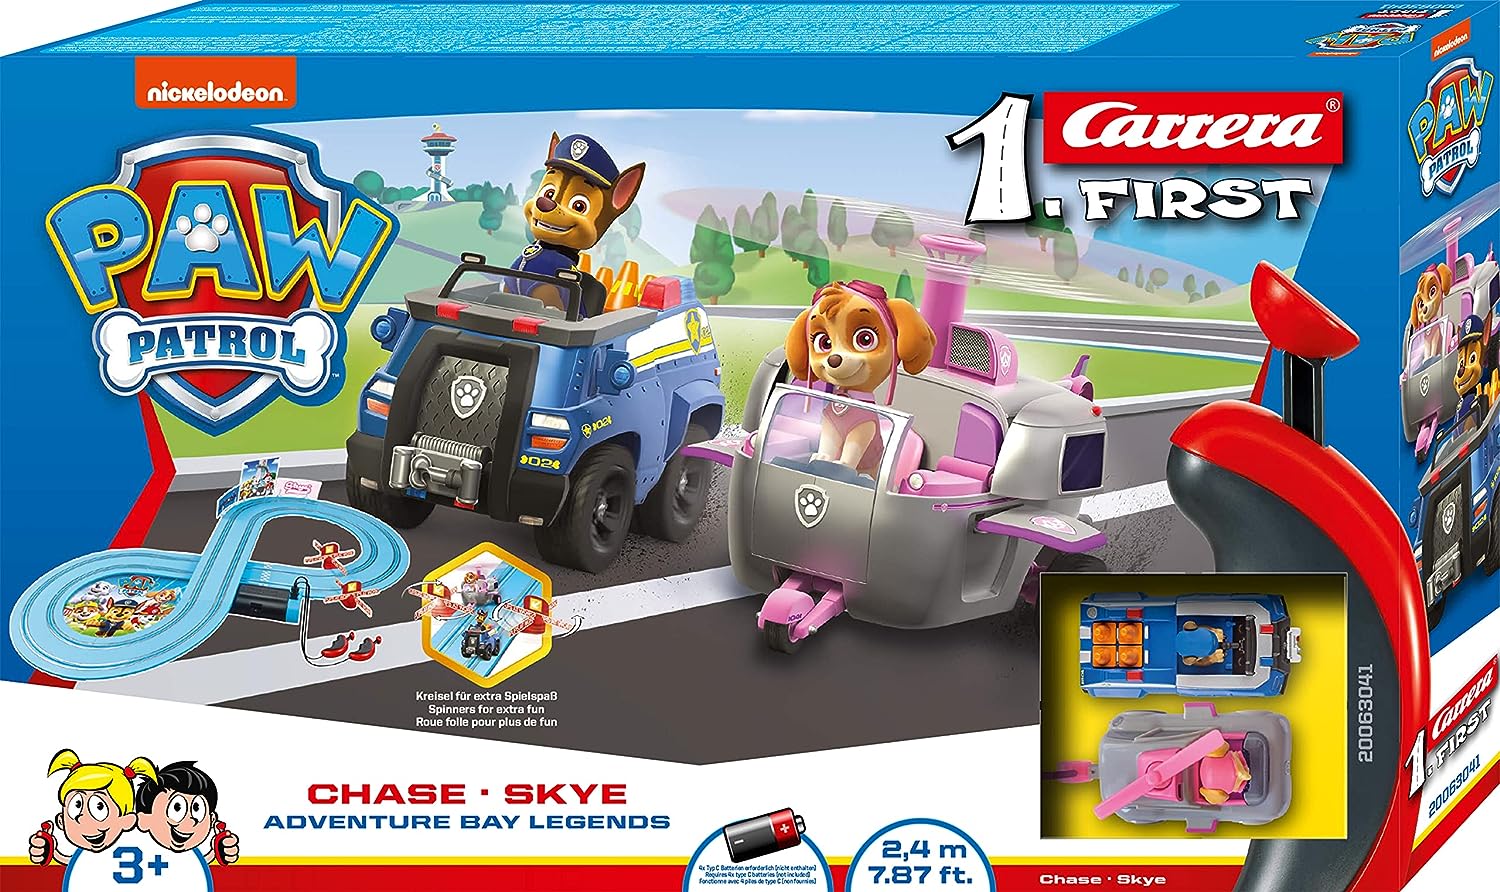 Paw Patrol Truck With 3 Vehicles Pat Patrol Toy Kids Cartoon